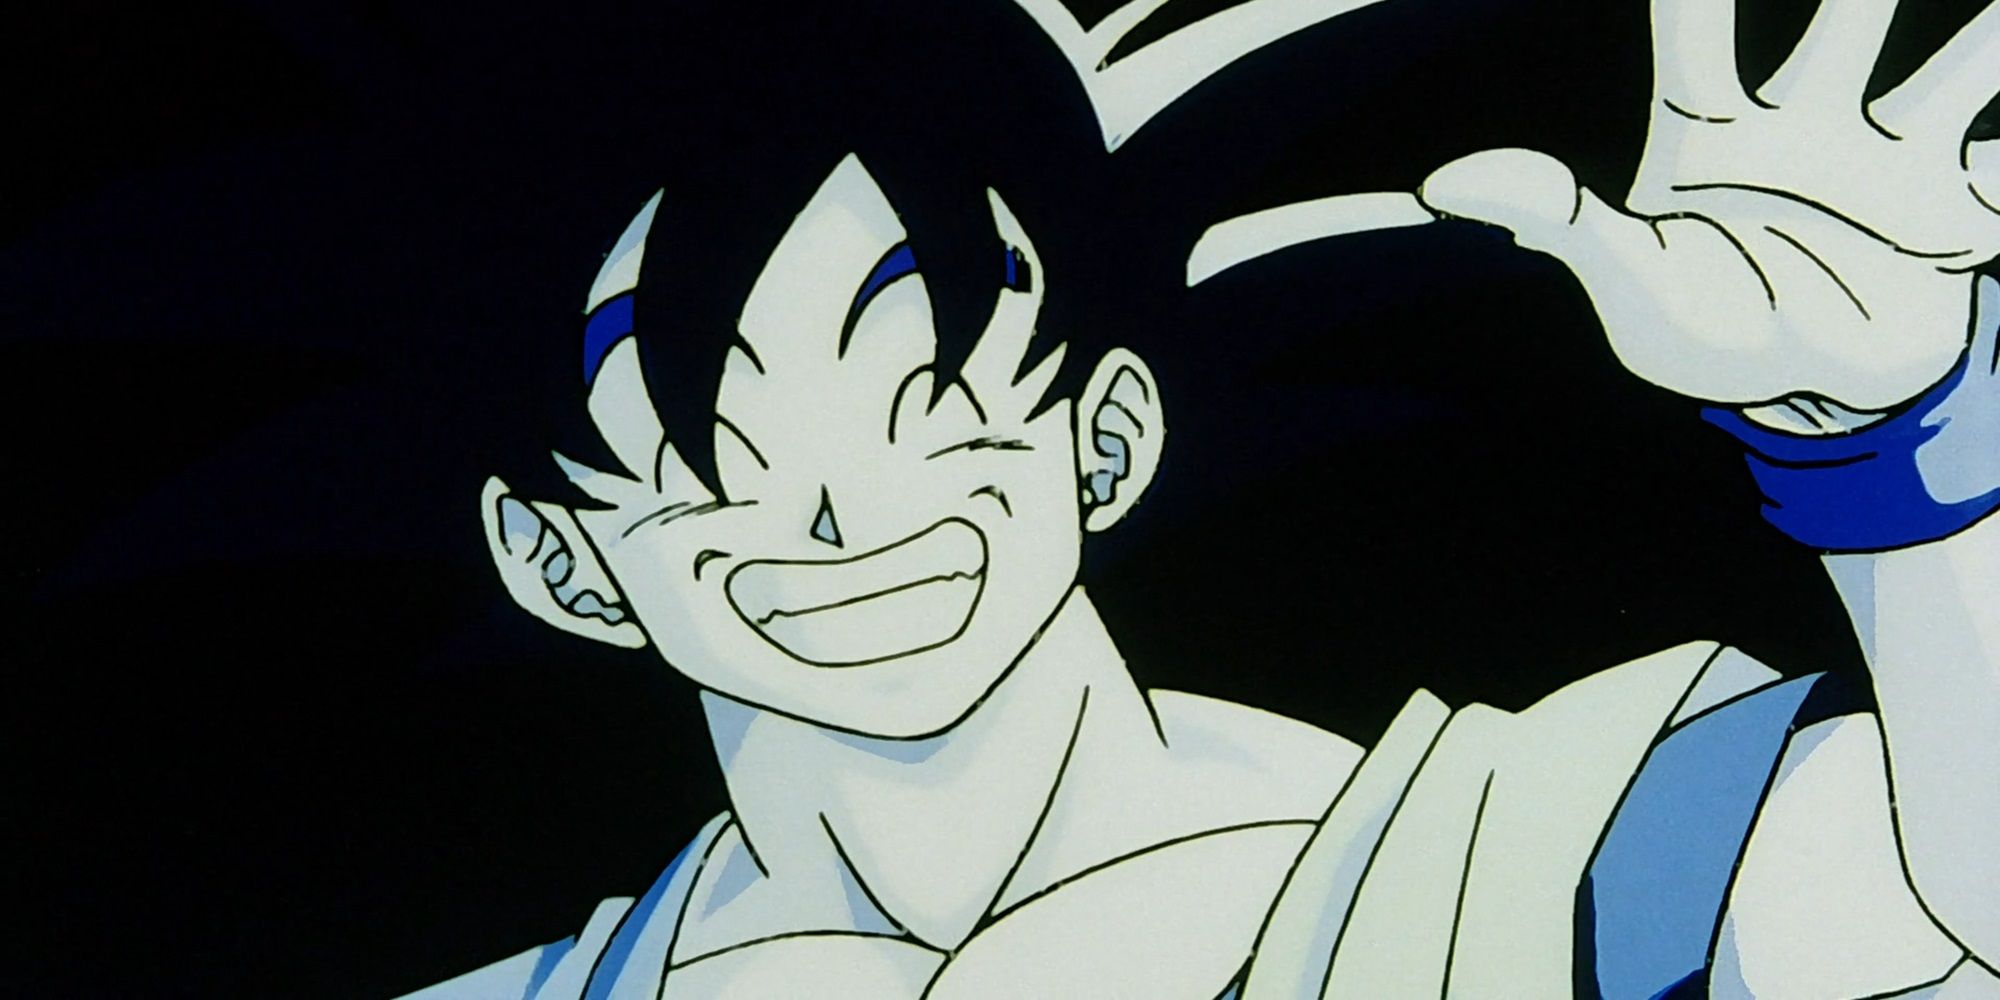 Goku saying goodbye to everyone in the Cell Saga of DBZ.